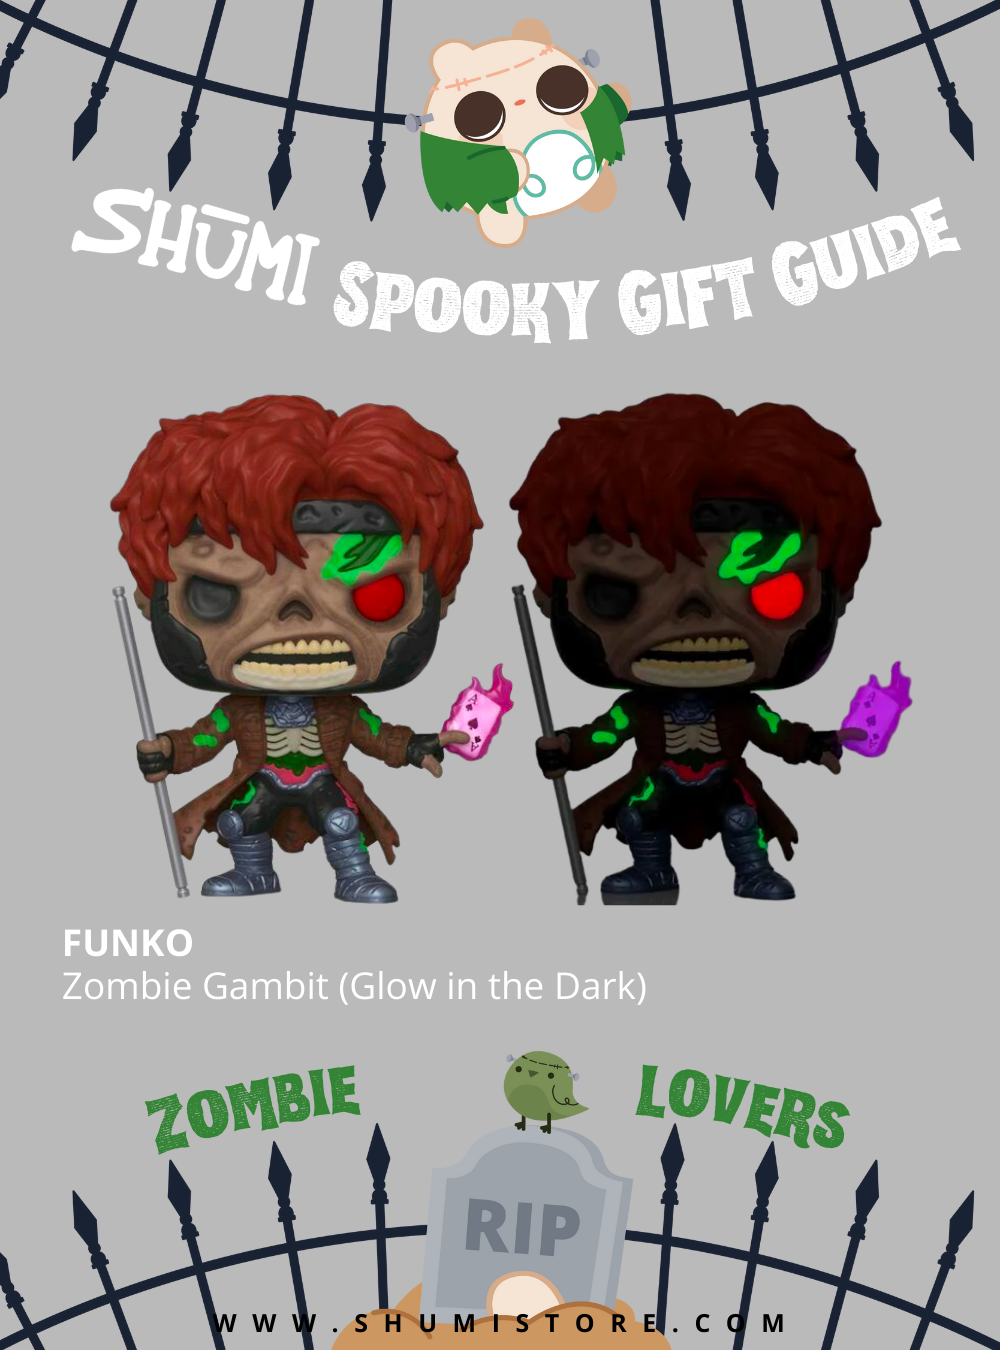 Funko zombie gambit glow in the dark